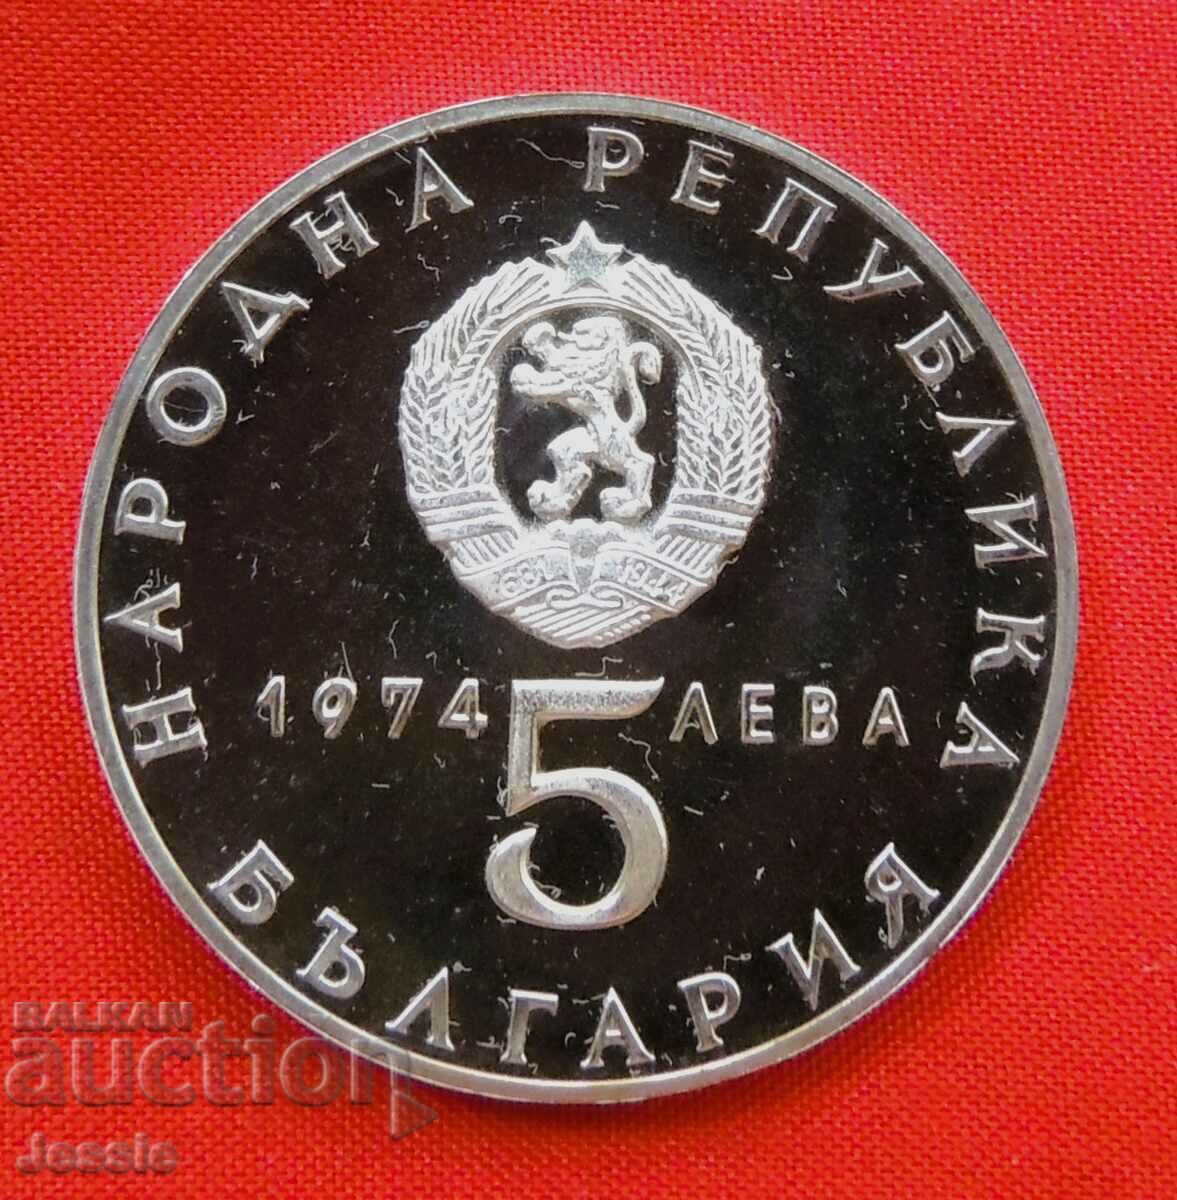 5 leva 1974 30 years. social revolution silver MINT